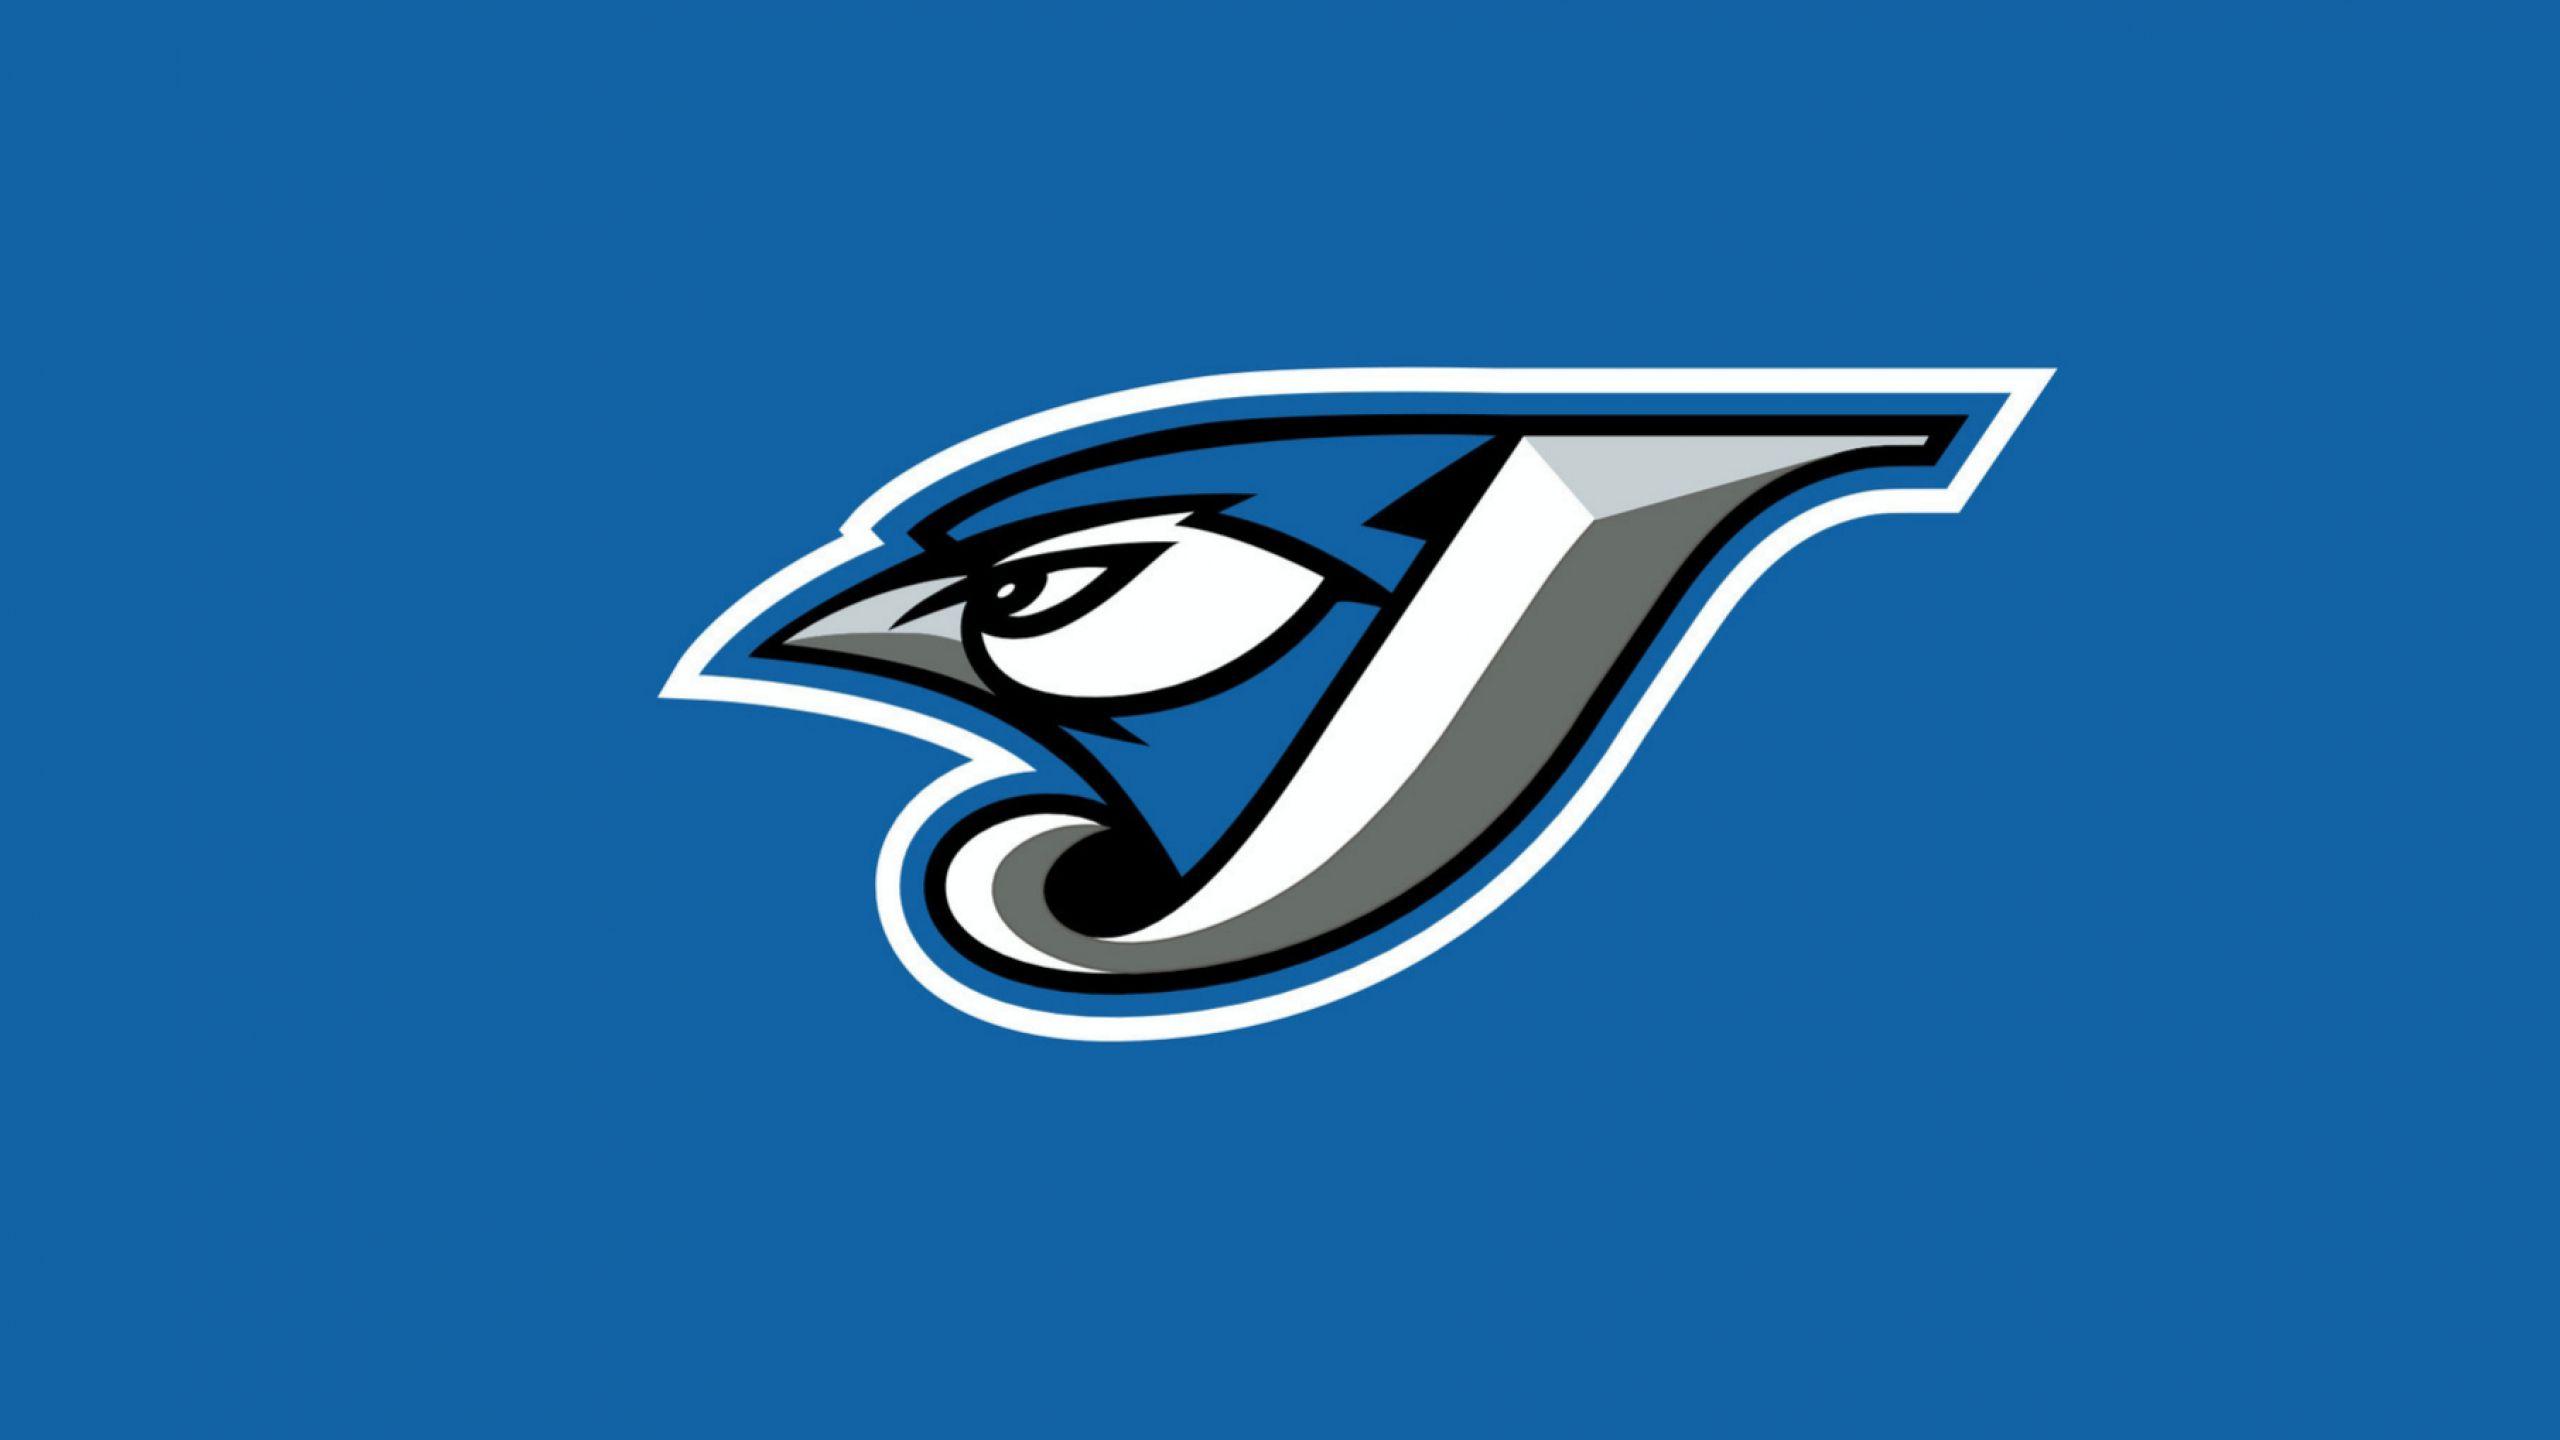 Toronto Blue Jays Logo Desktop Wallpaper 51373. Best Free Desktop